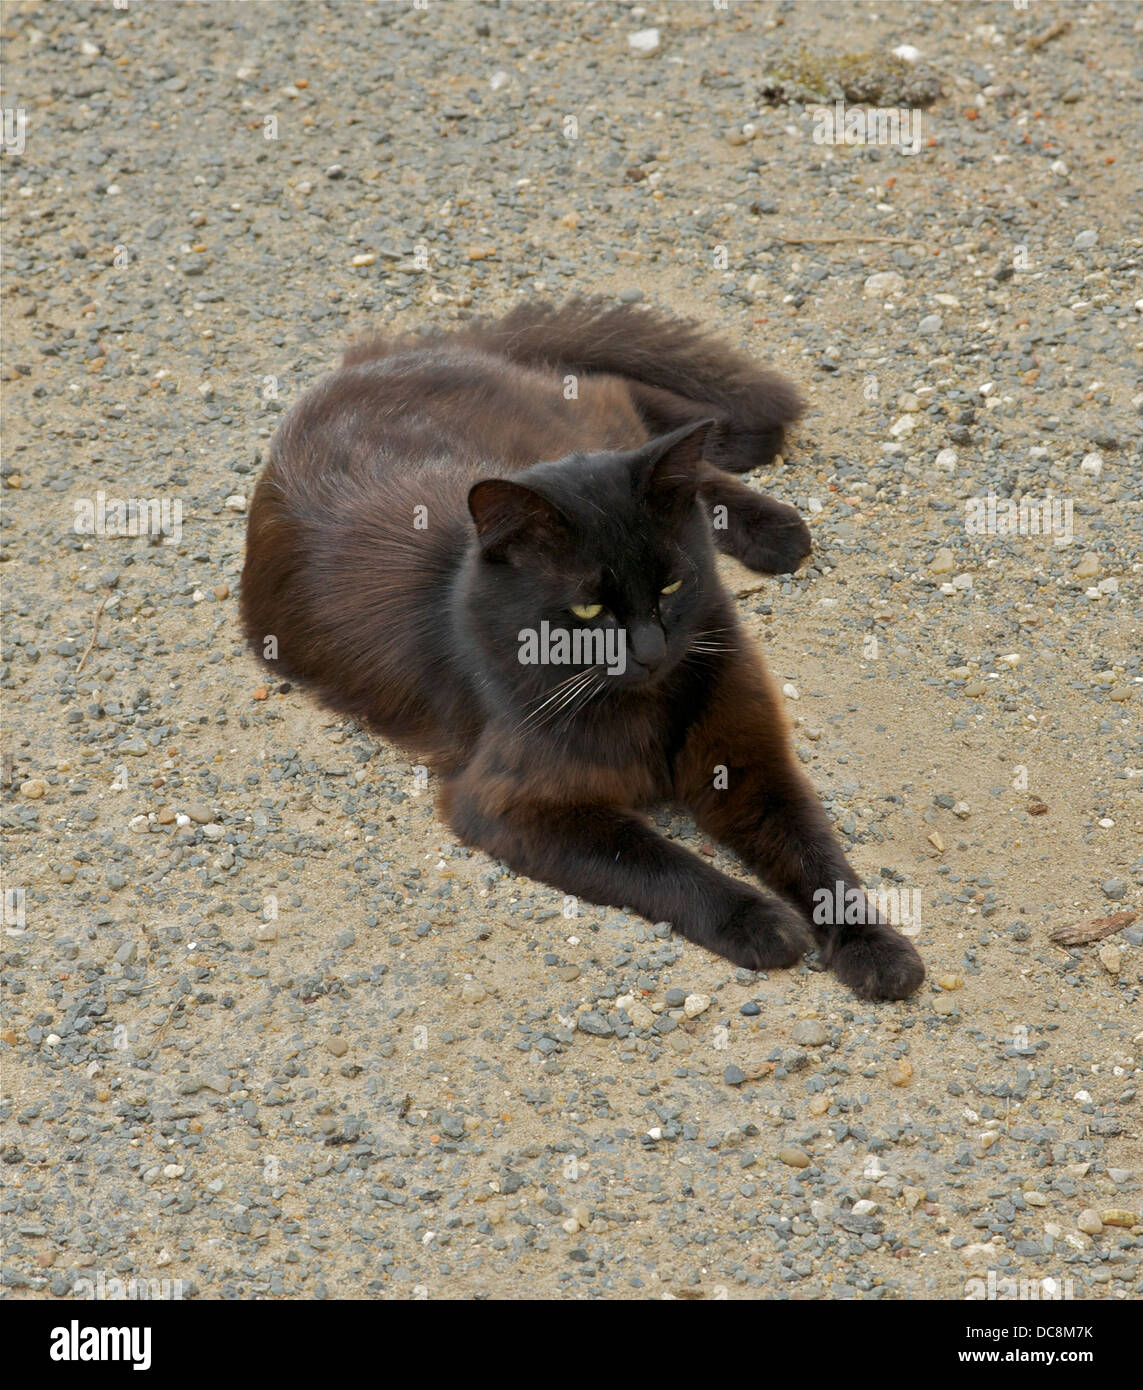 A common street cat, Felis sylvestris catus, in Dordogne, France. Stock Photo